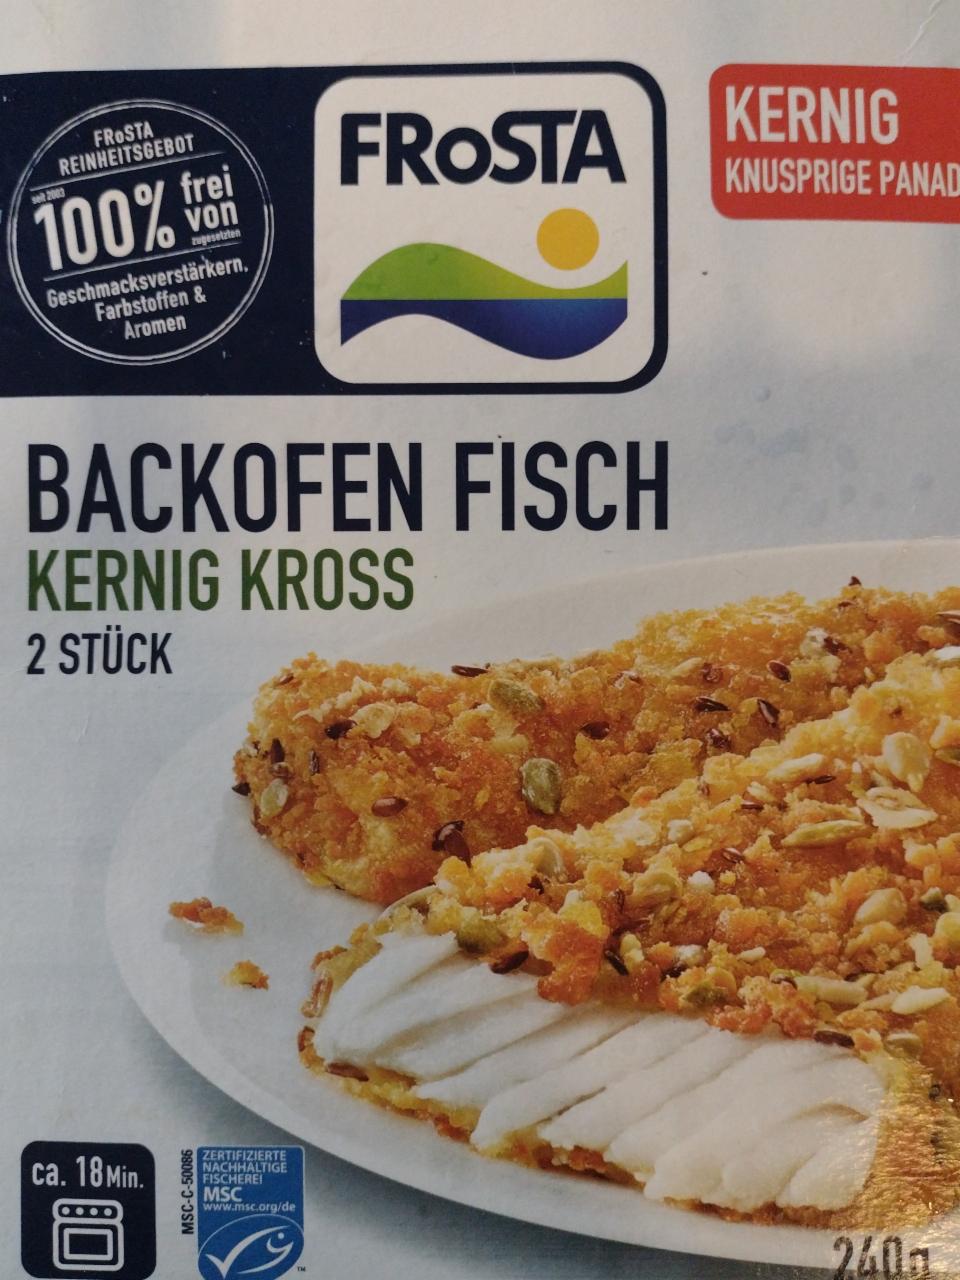 Fotografie - Backofen Fisch Kernig Kross FRoSTA